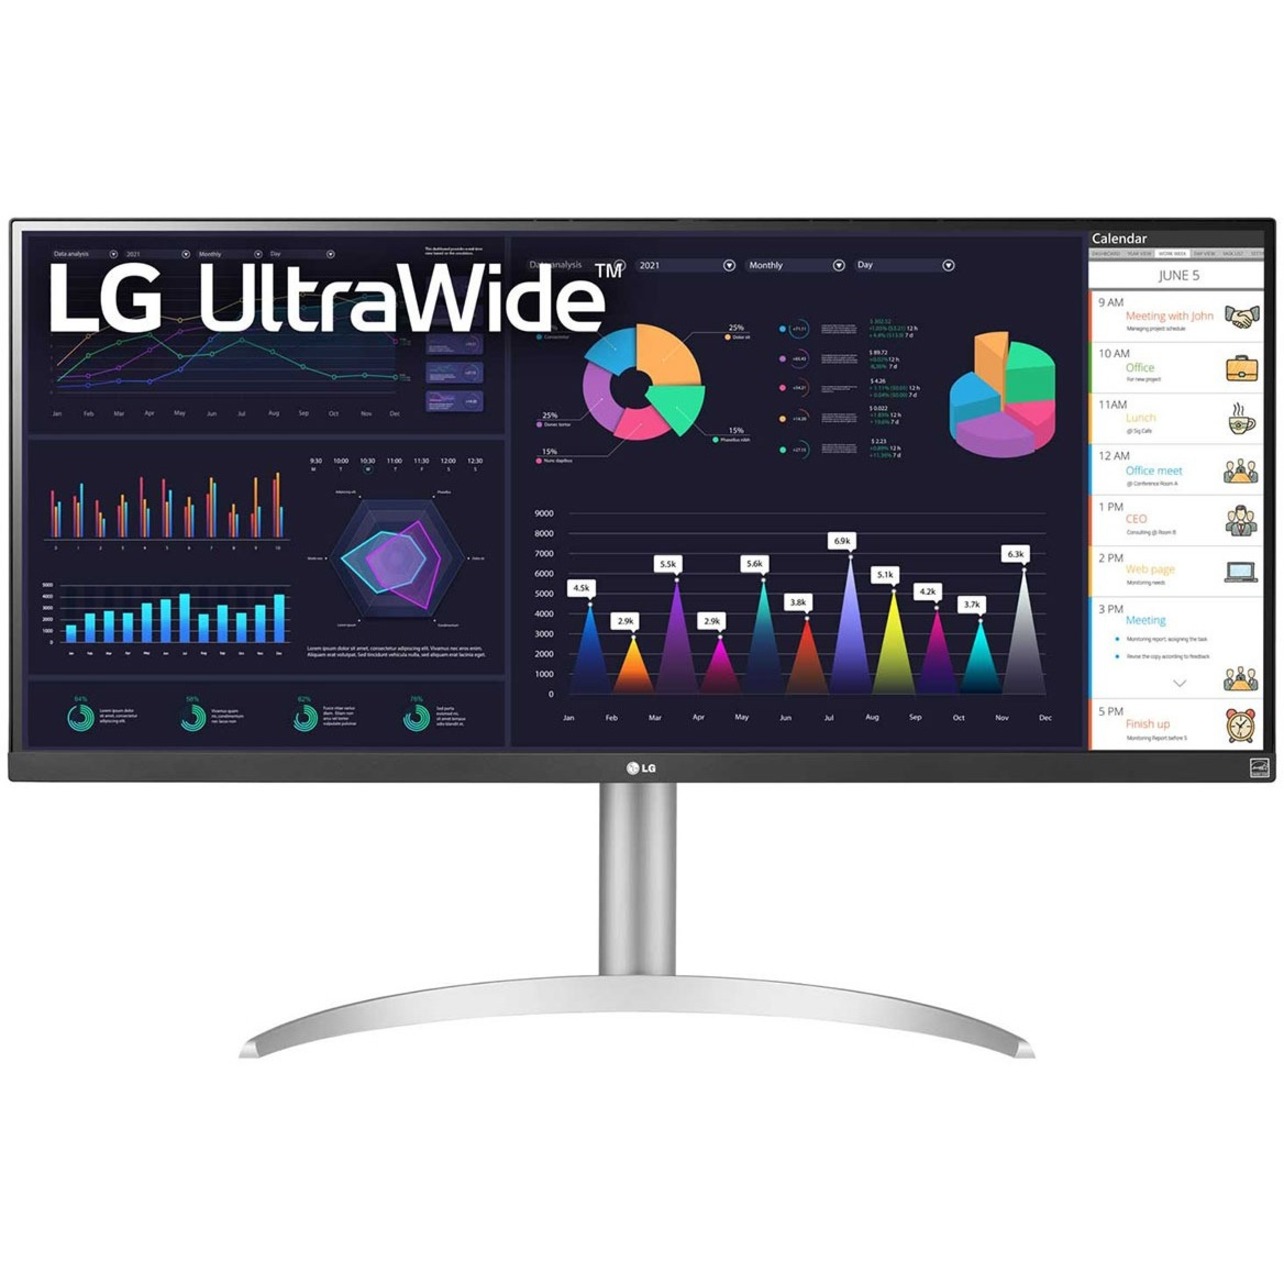 LG Ultrawide 34WQ650-W 34" Class UW-UXGA LCD Monitor - 21:9 - 34" Viewable - In-plane Switching (IPS) Technology - 2560 x 1080 - 16.7 Million Colors - Adaptive Sync/FreeSync - 400 Nit - 1 ms - 100 ... - image 1 of 11